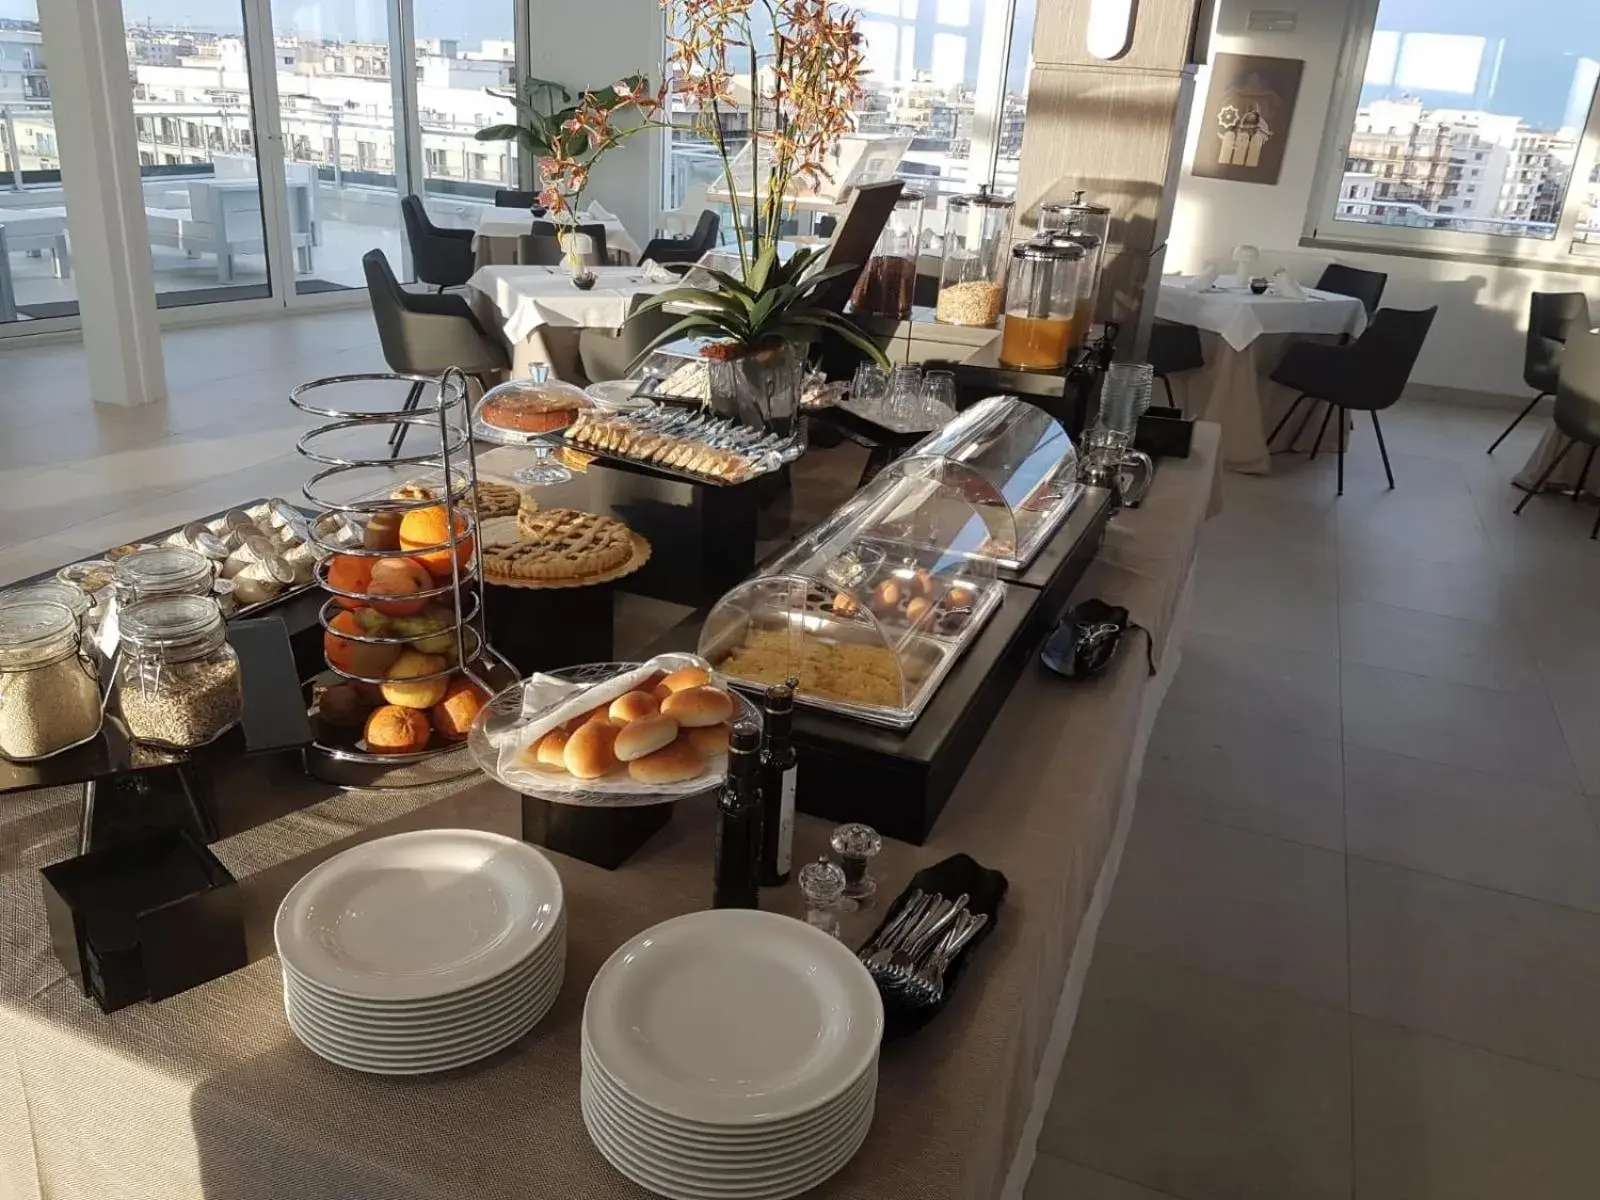 Buffet breakfast in Grieco Business & Spa Hotel